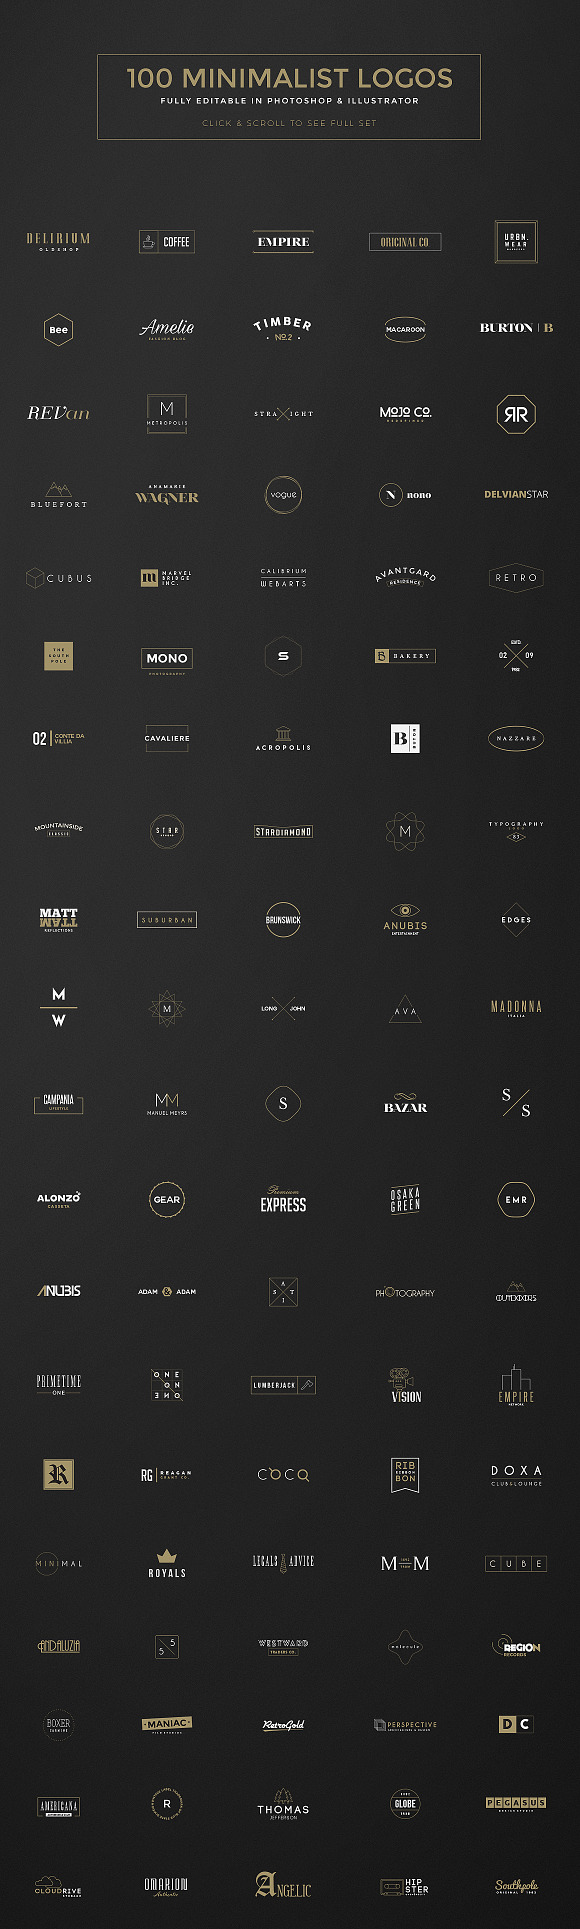 100 Minimal Logos + BONUS in Logo Templates - product preview 2